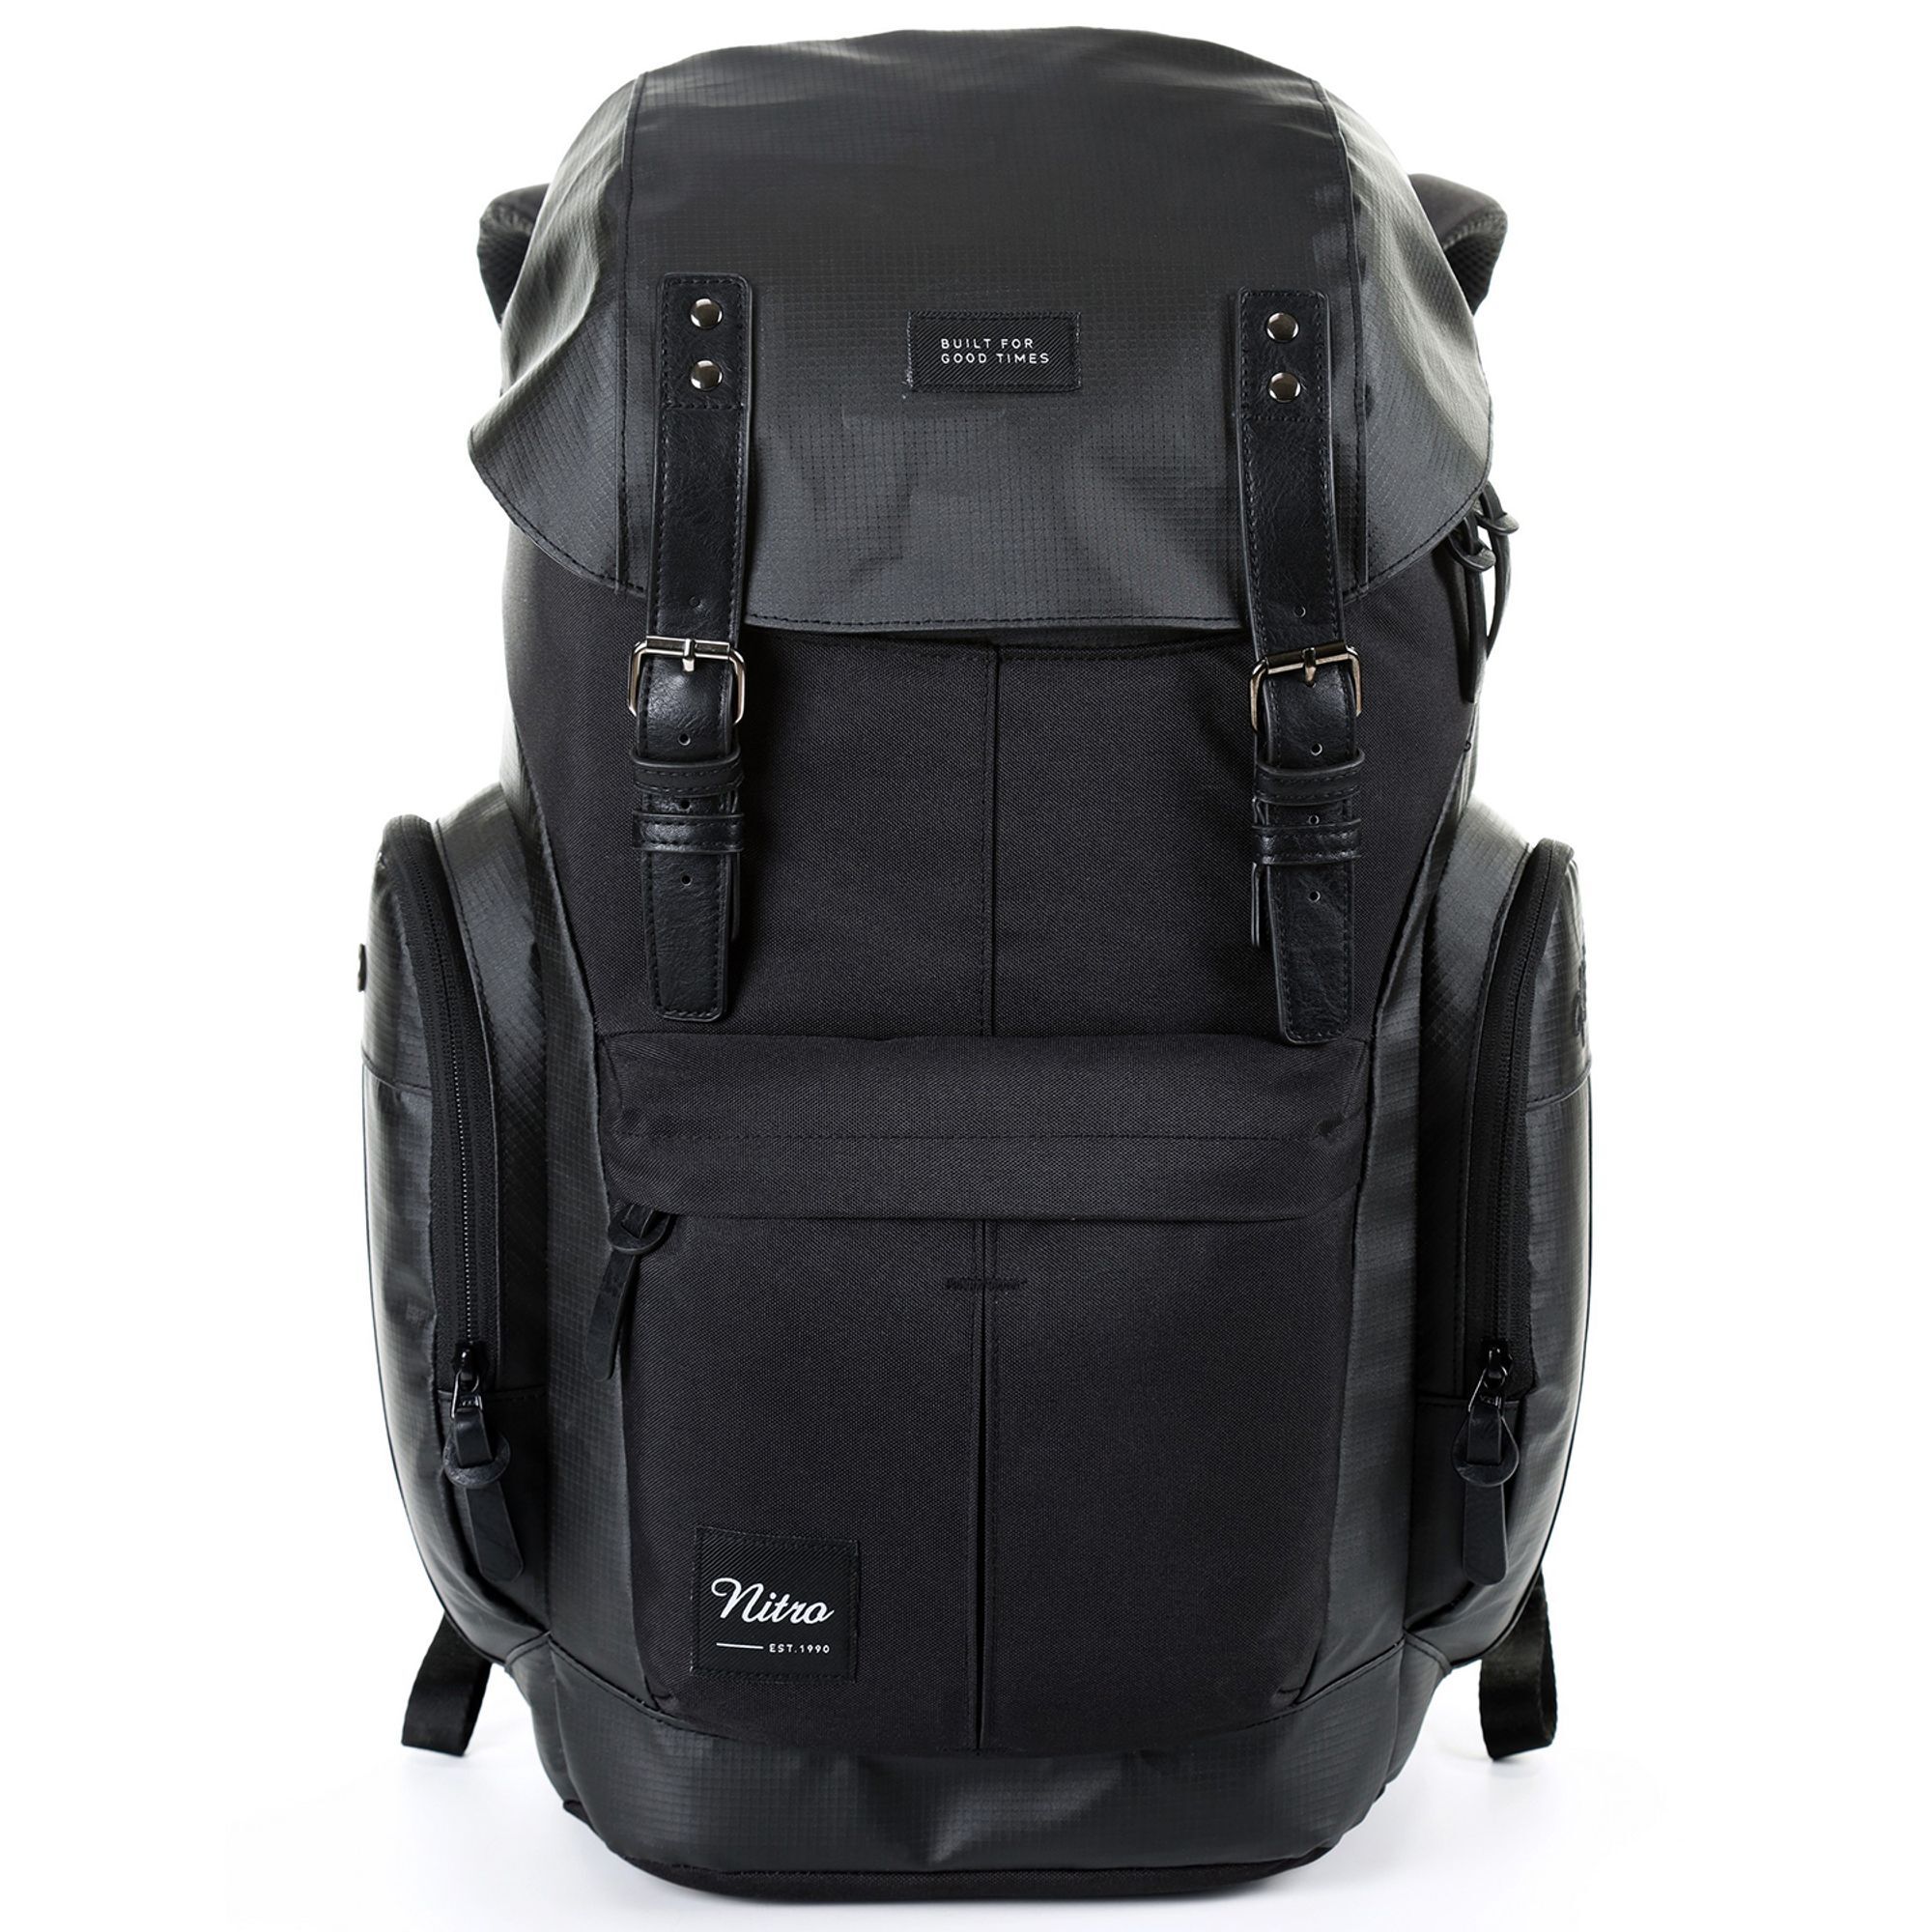 Рюкзак Nitro Urban Daypacker 46 cm Laptopfach, цвет tough black рюкзак wenger crango 46 cm laptopfach цвет gravity black